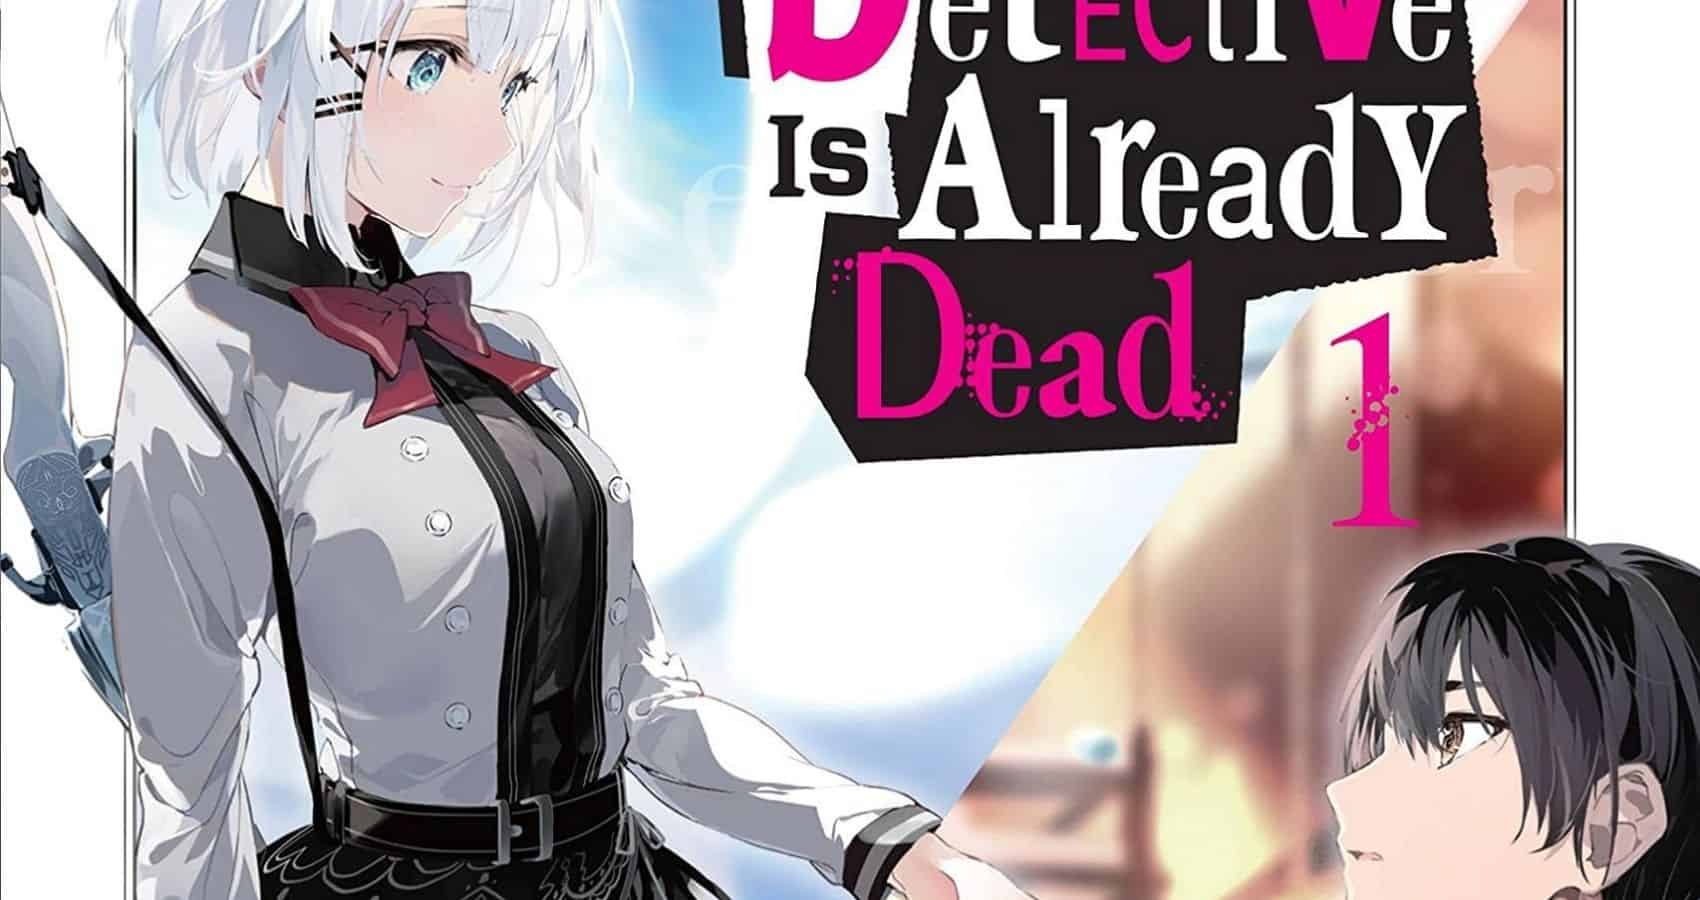 The detective is already dead manga